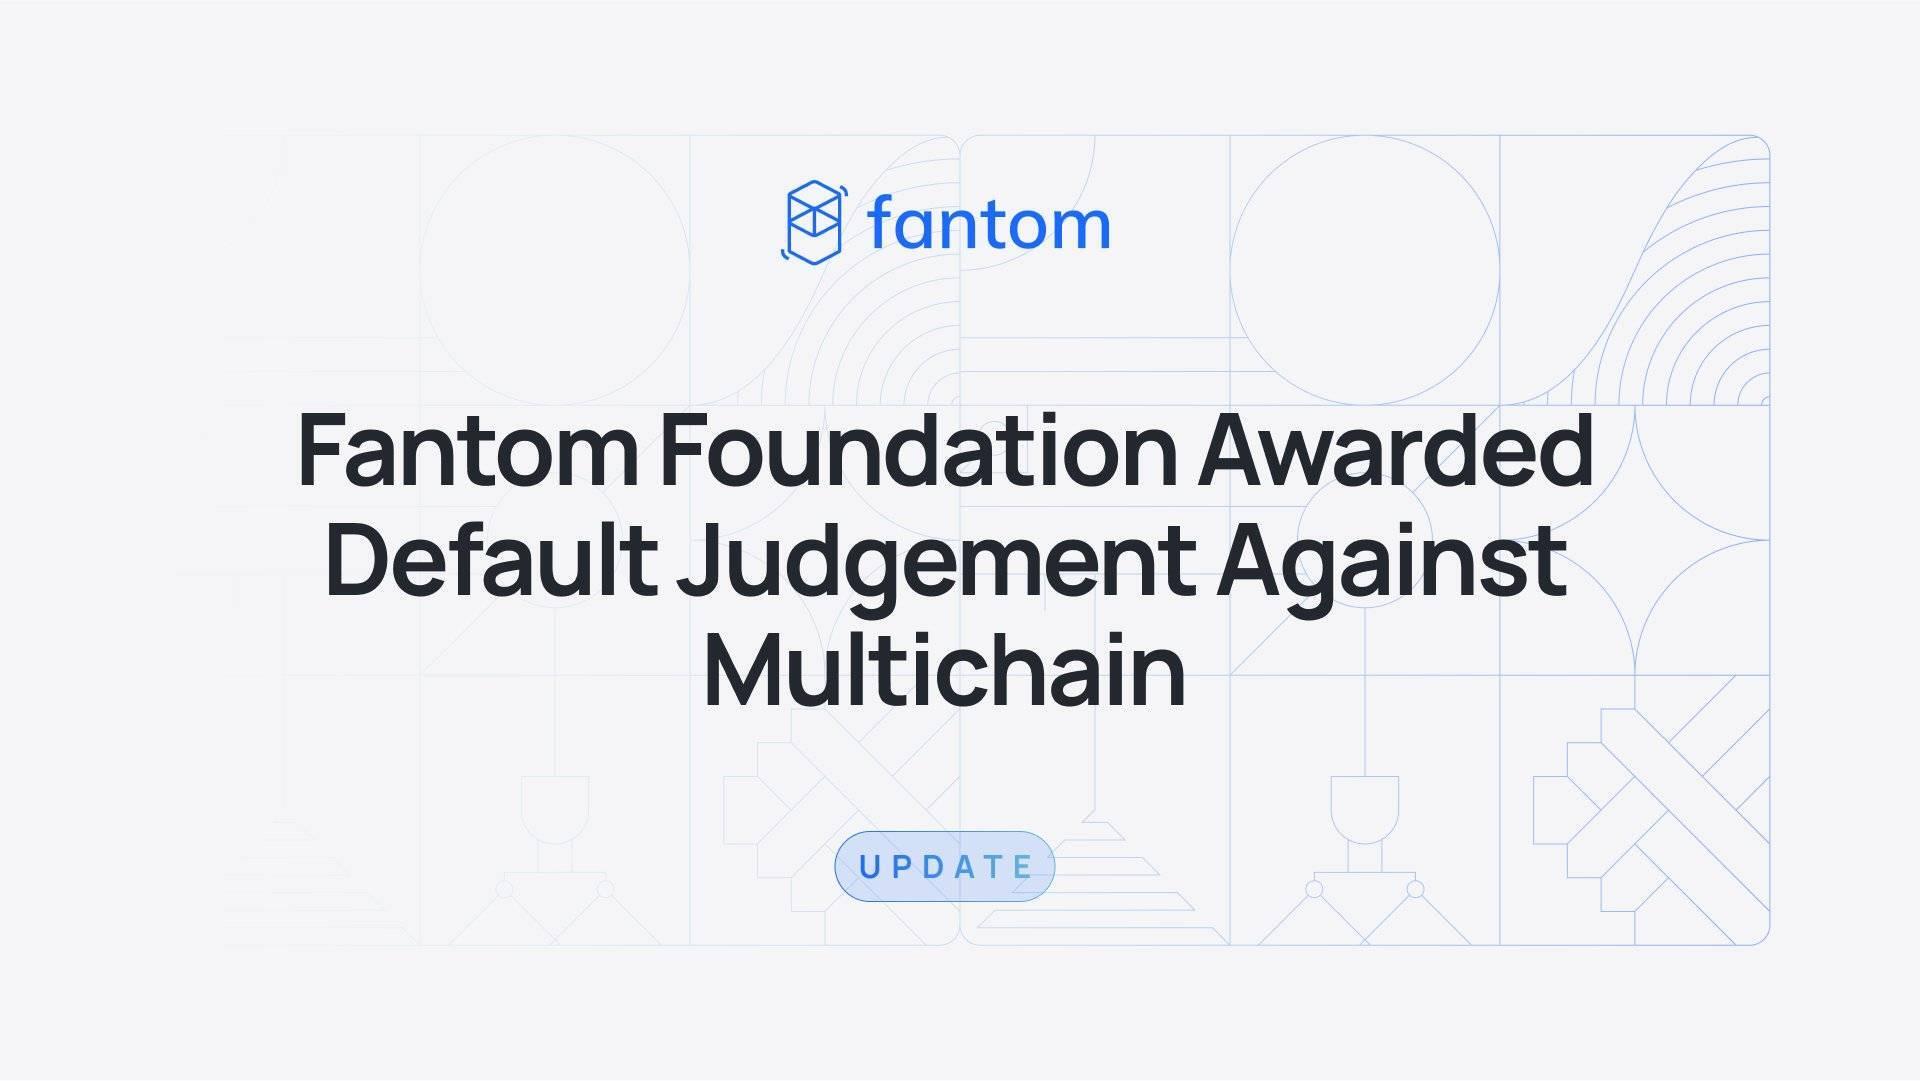 fantom-foundation-doi-multichain-boi-thuong-65-trieu-usd